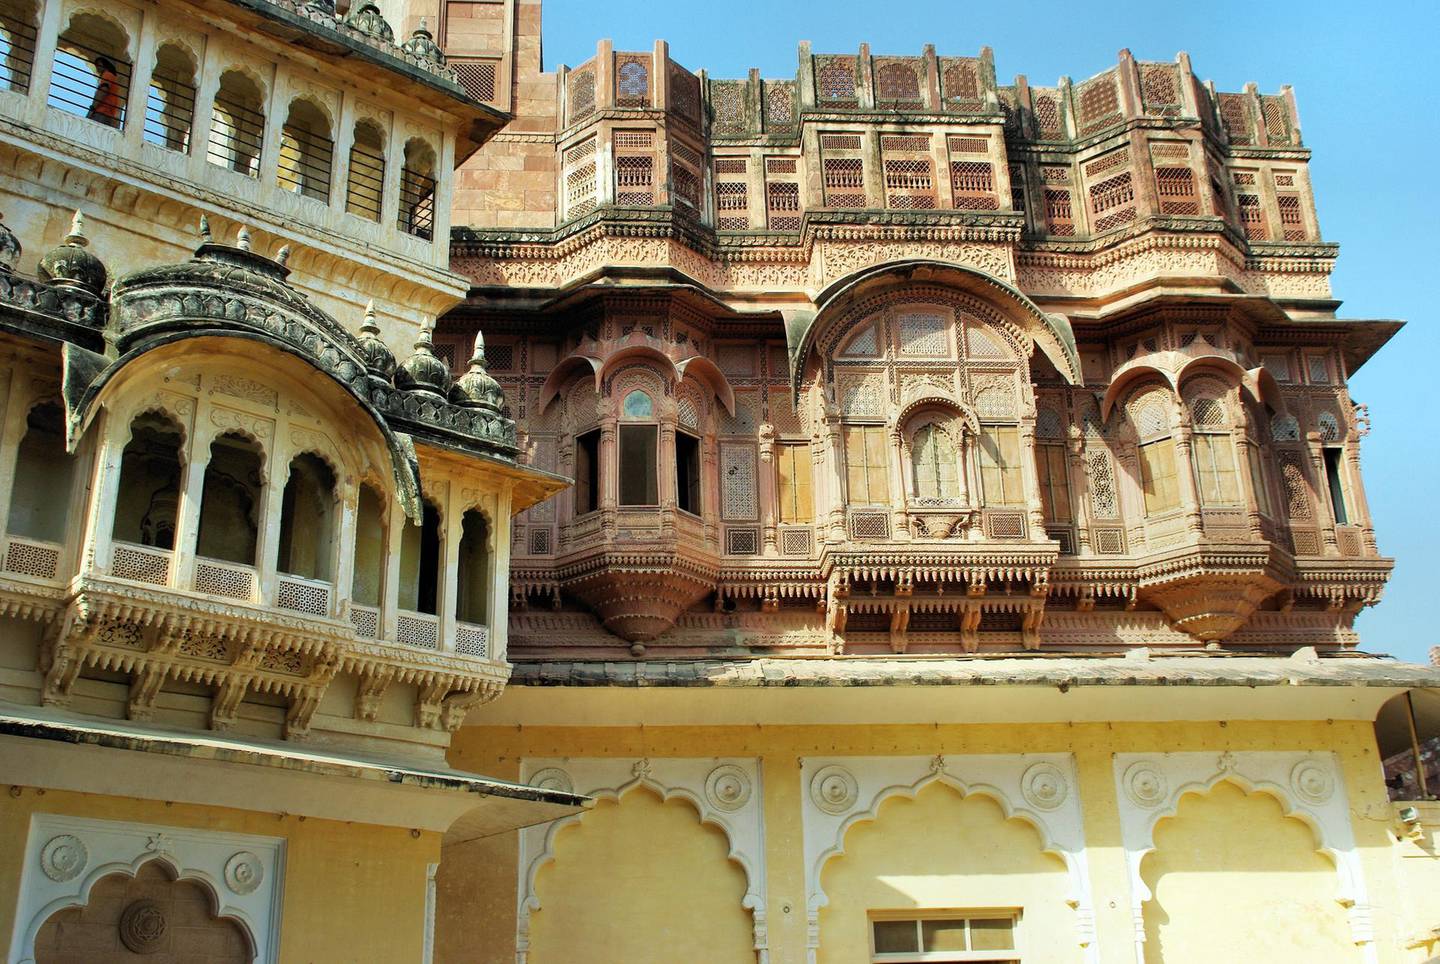 The facade of the Jaisalmer Palace, Rajasthan. Pixabay